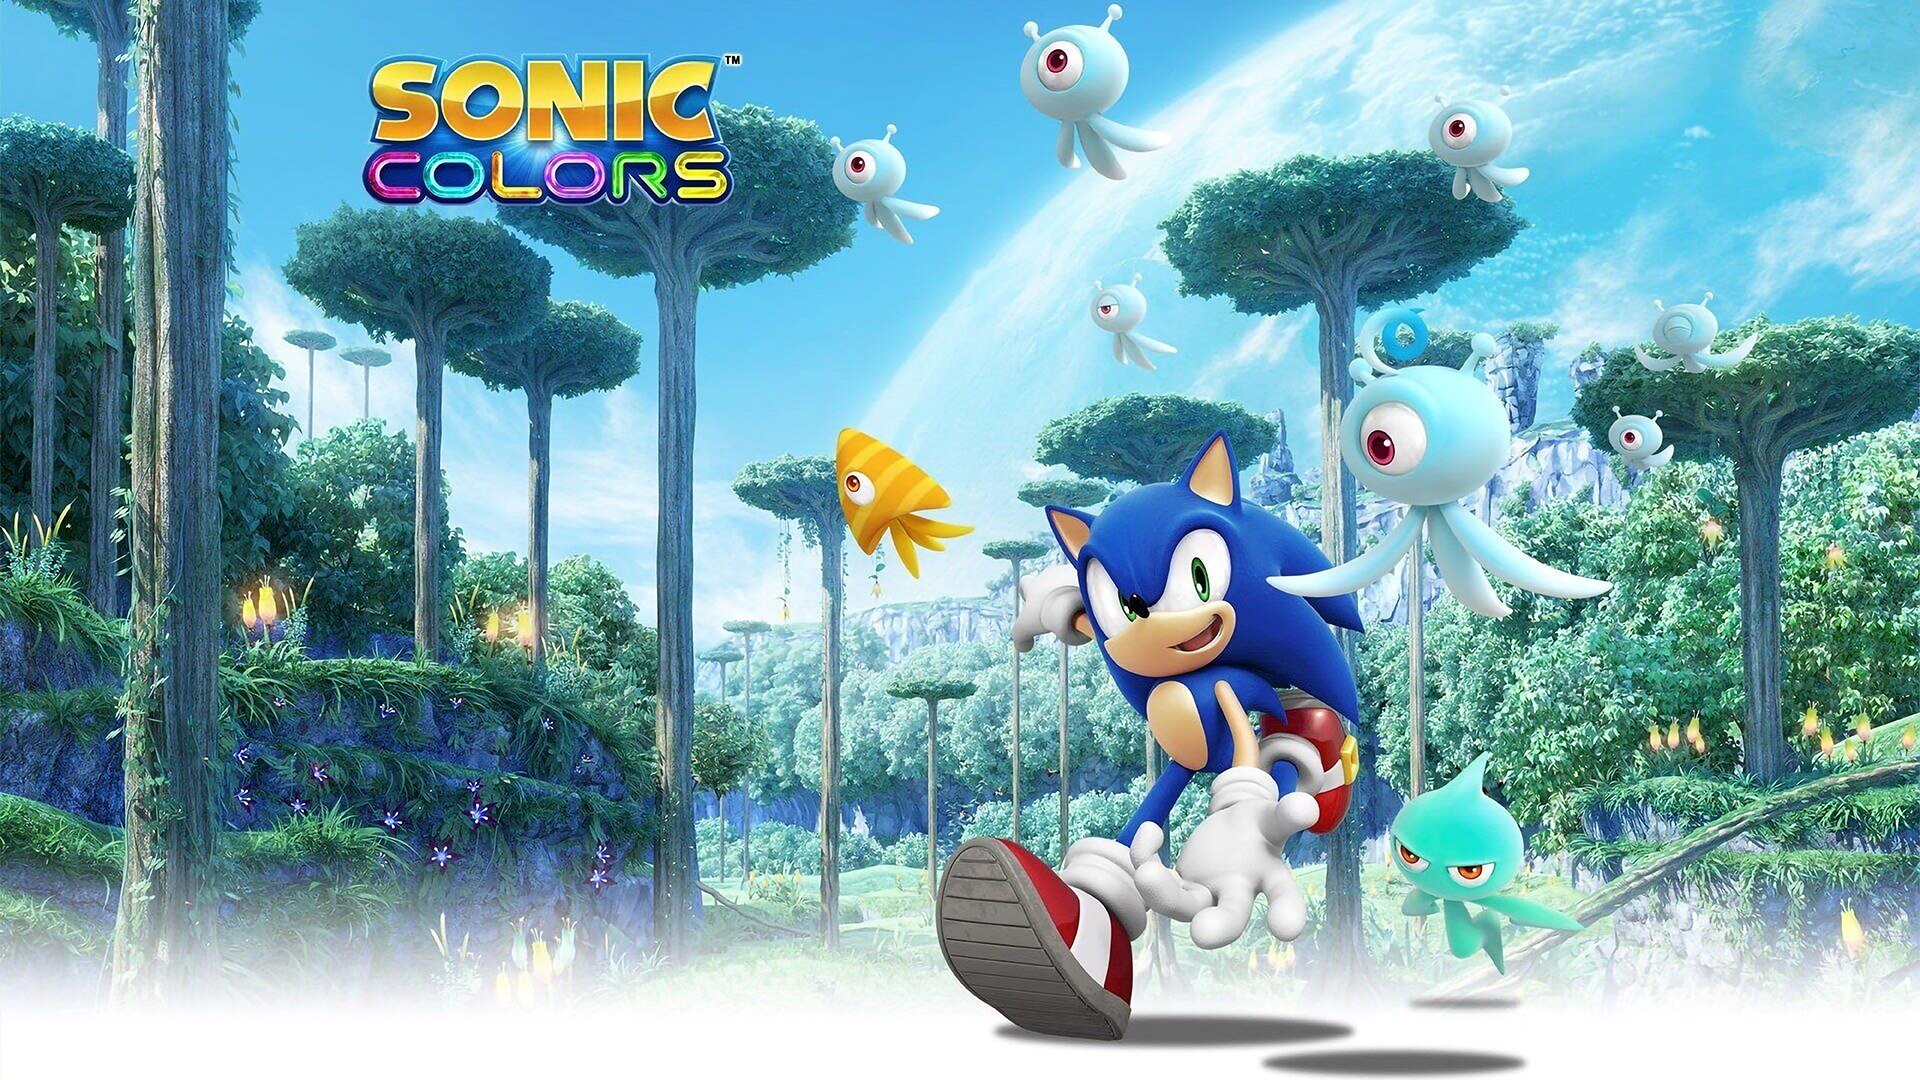 iksample หลุดรายชื่อ Sonic Colors Remastered